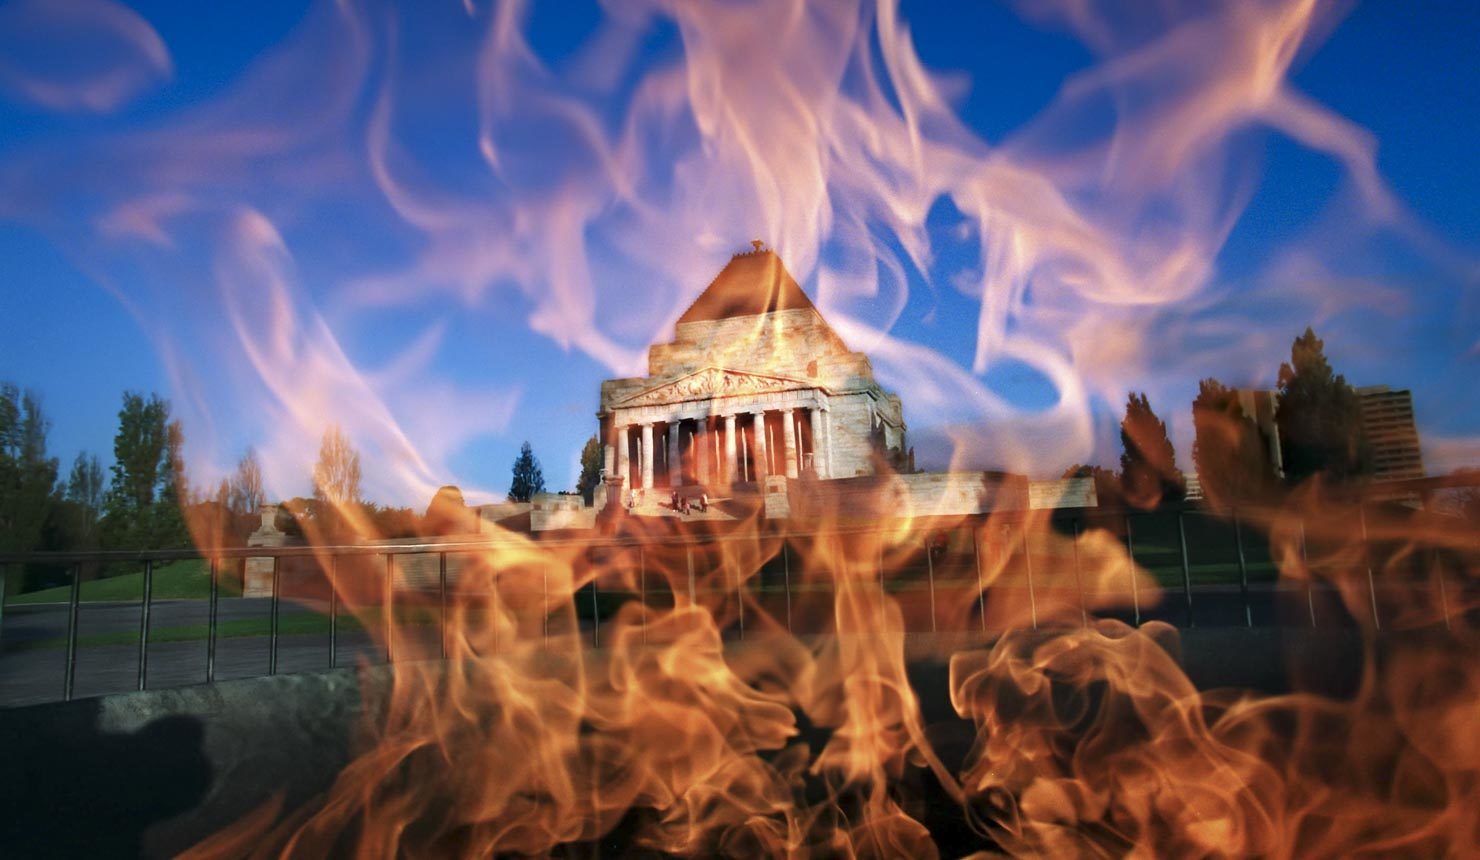 Melbourne's Shrine of Remeberance & Eternal Flame